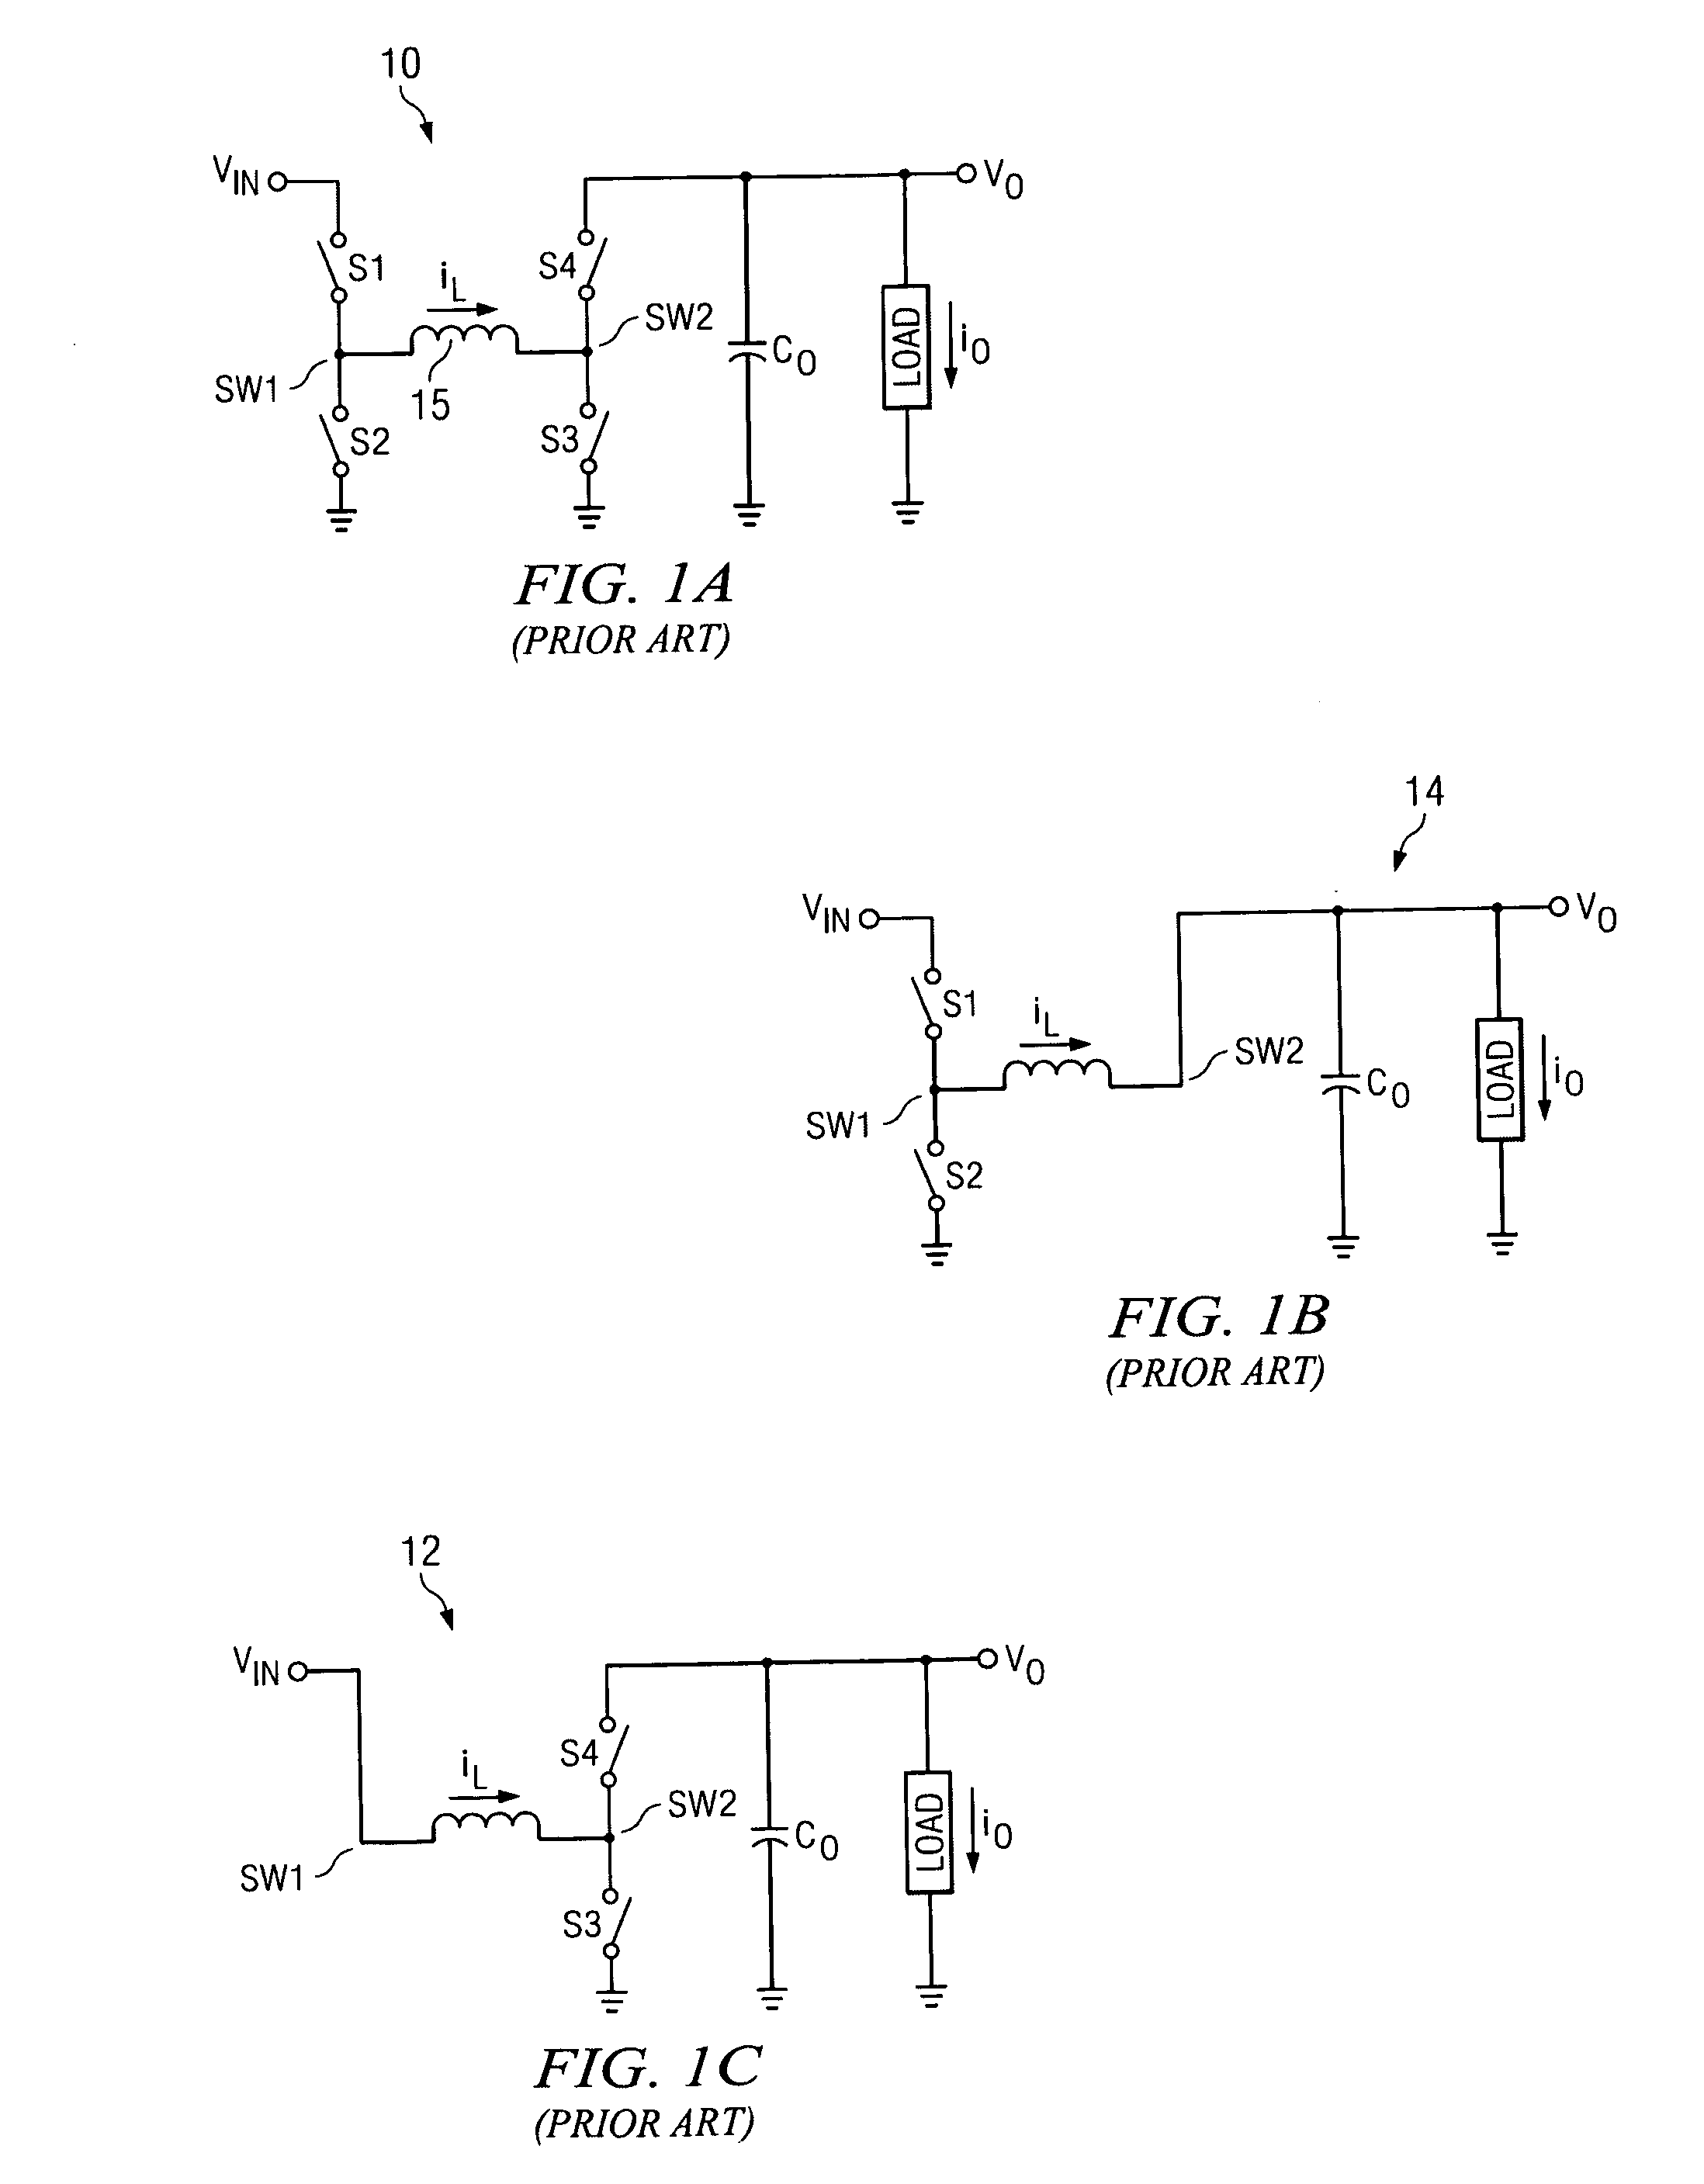 Multiple switch node power converter control scheme that avoids switching sub-harmonics